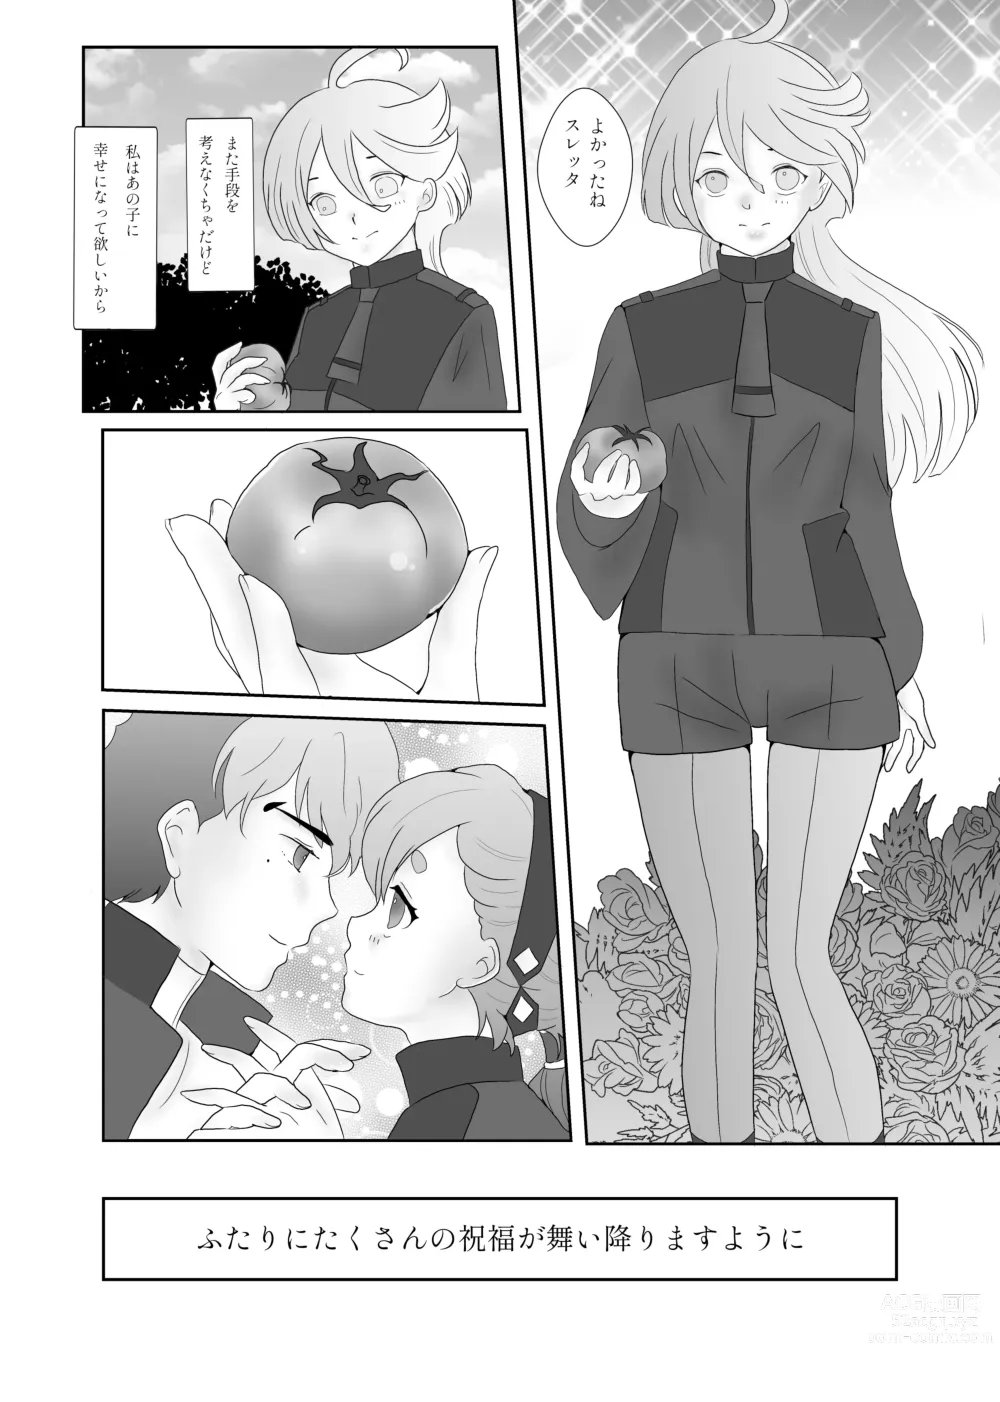 Page 26 of doujinshi Nichijō romantikku